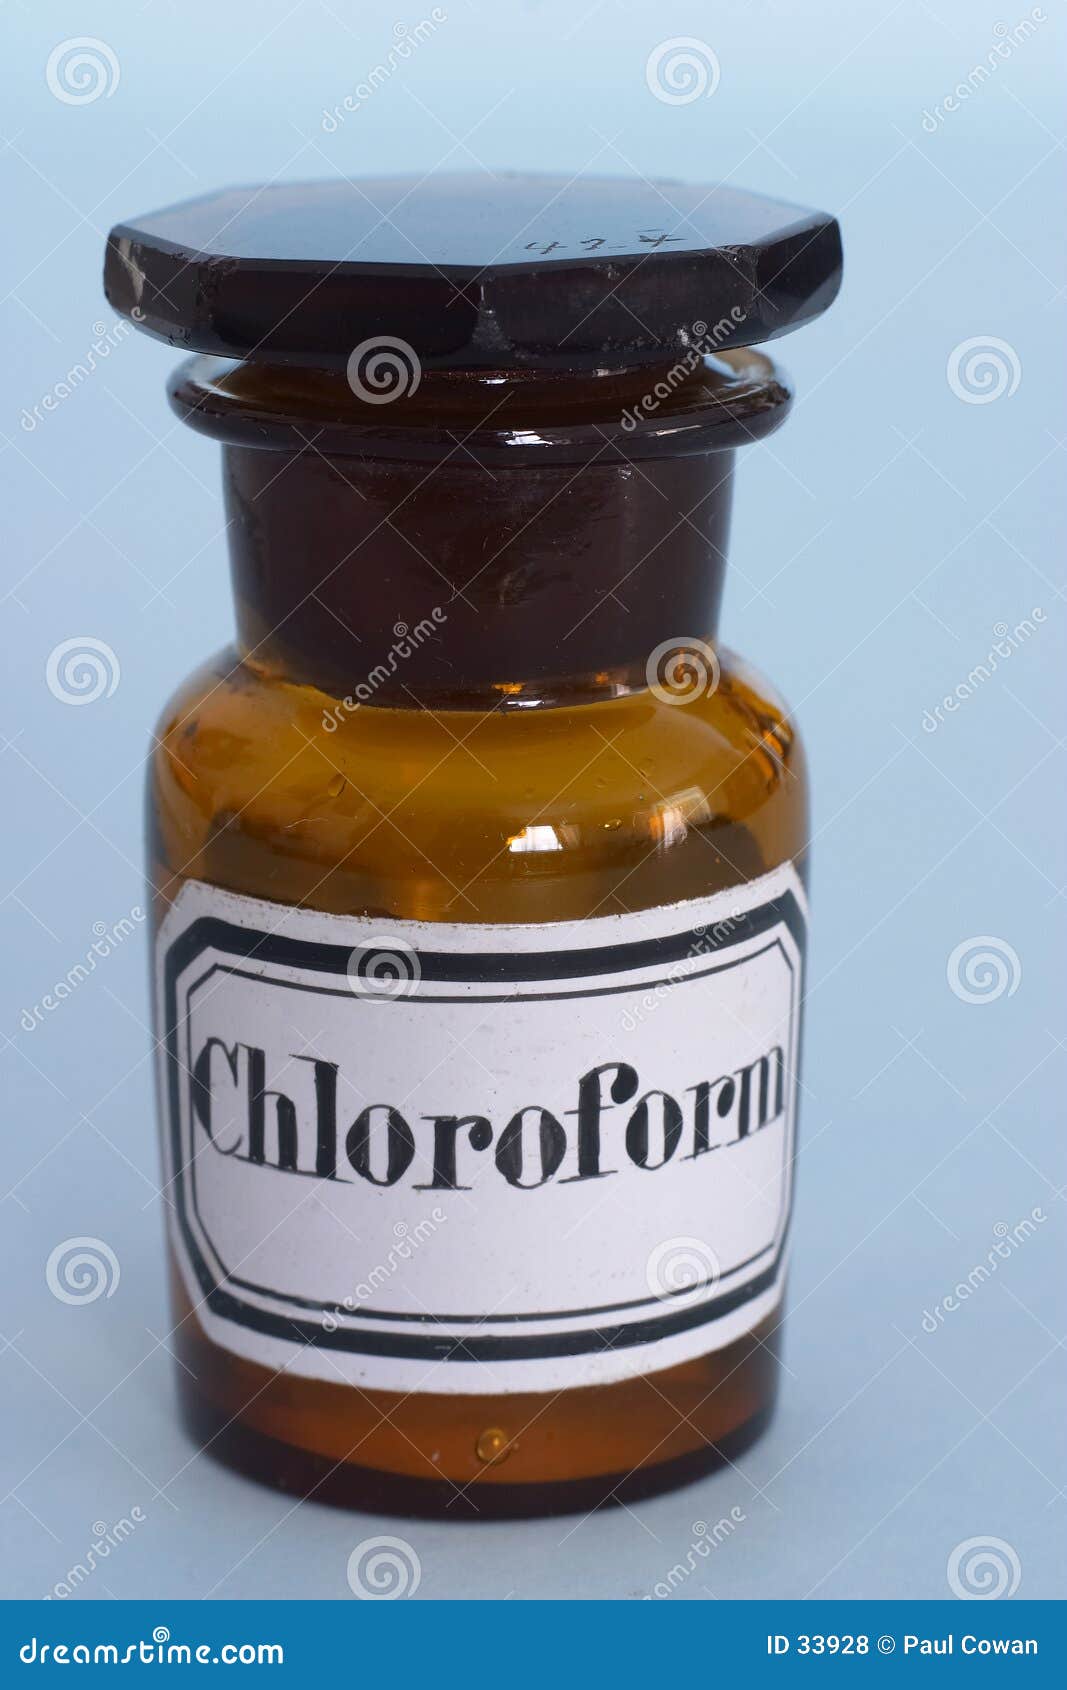 botella-2-del-cloroformo-33928.jpg